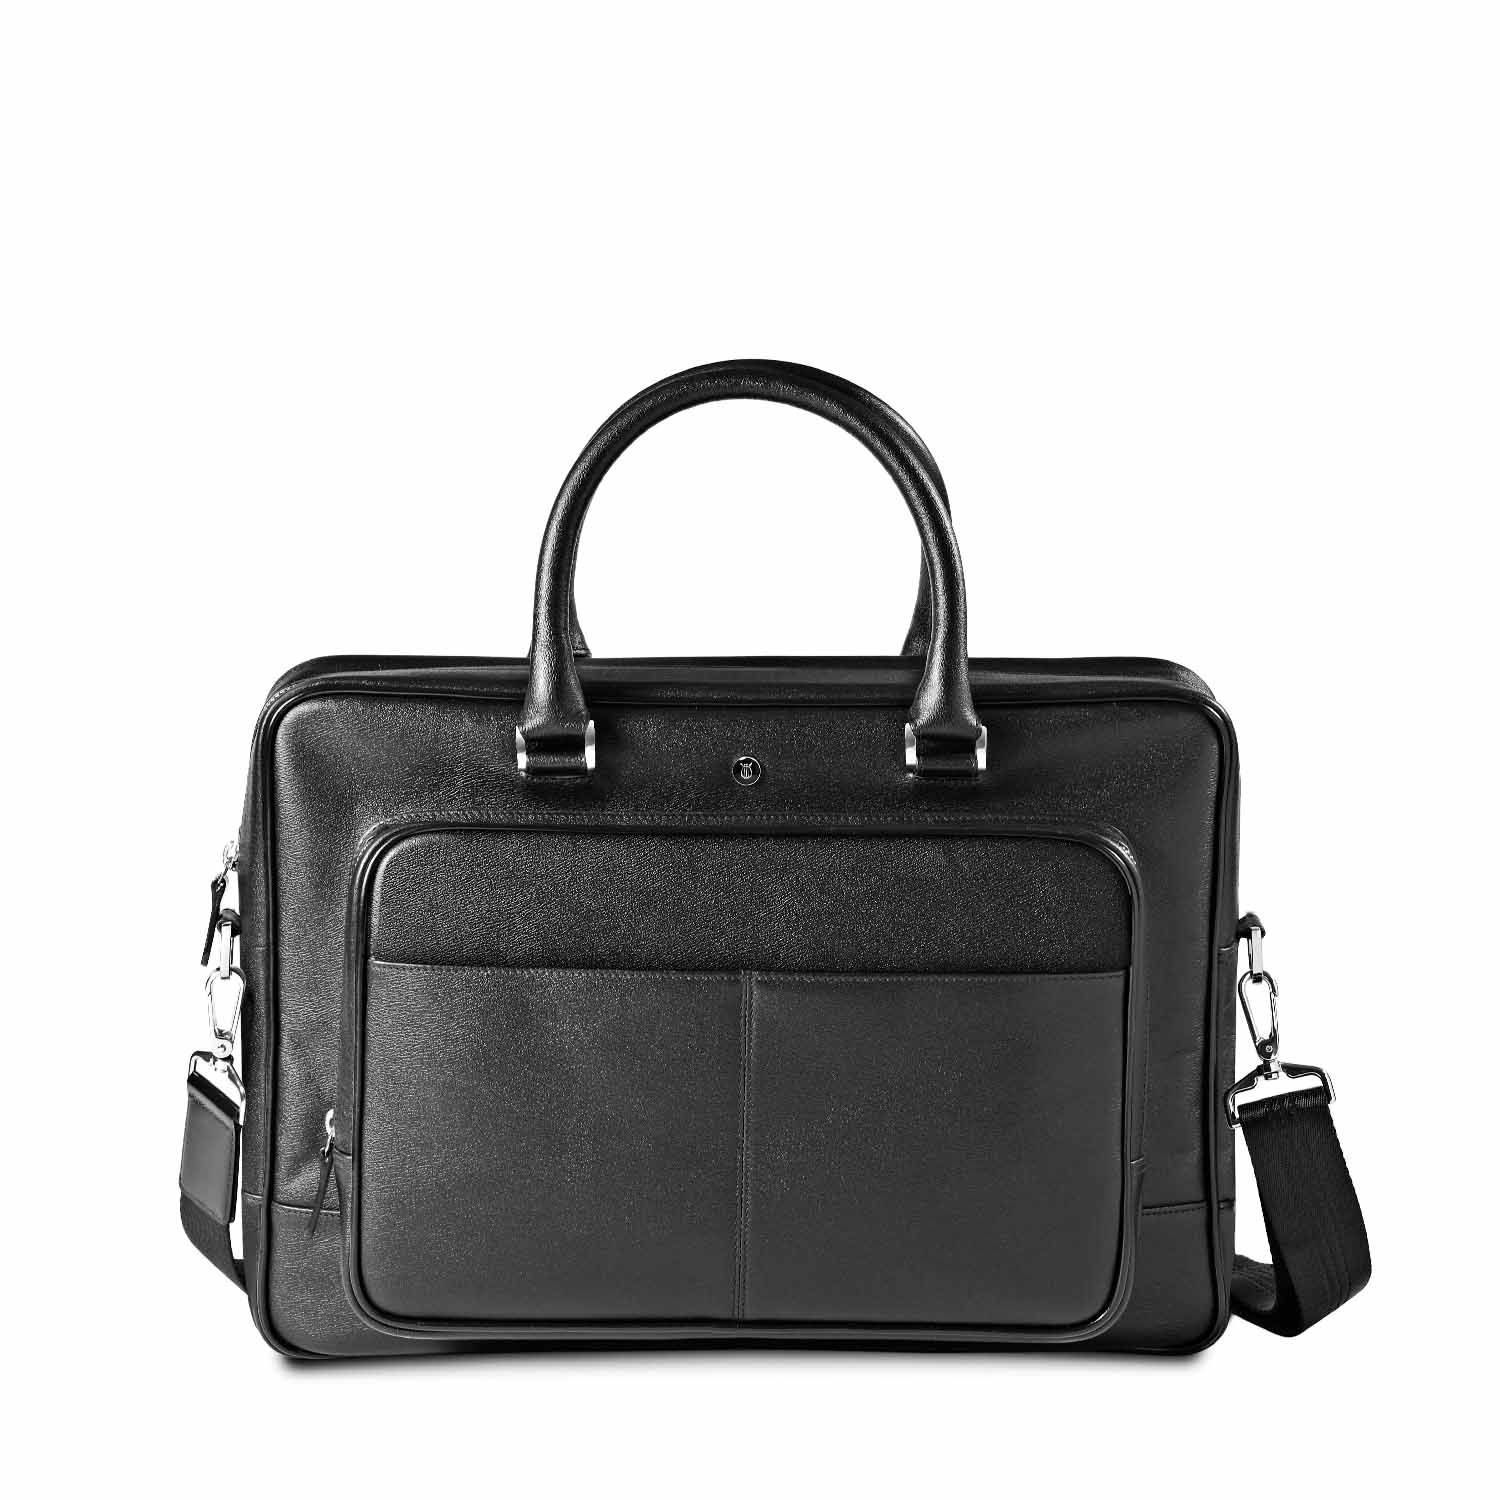 Lapis Bard Belgravia Leather Tate 14-inch Laptop Business Bag - Black